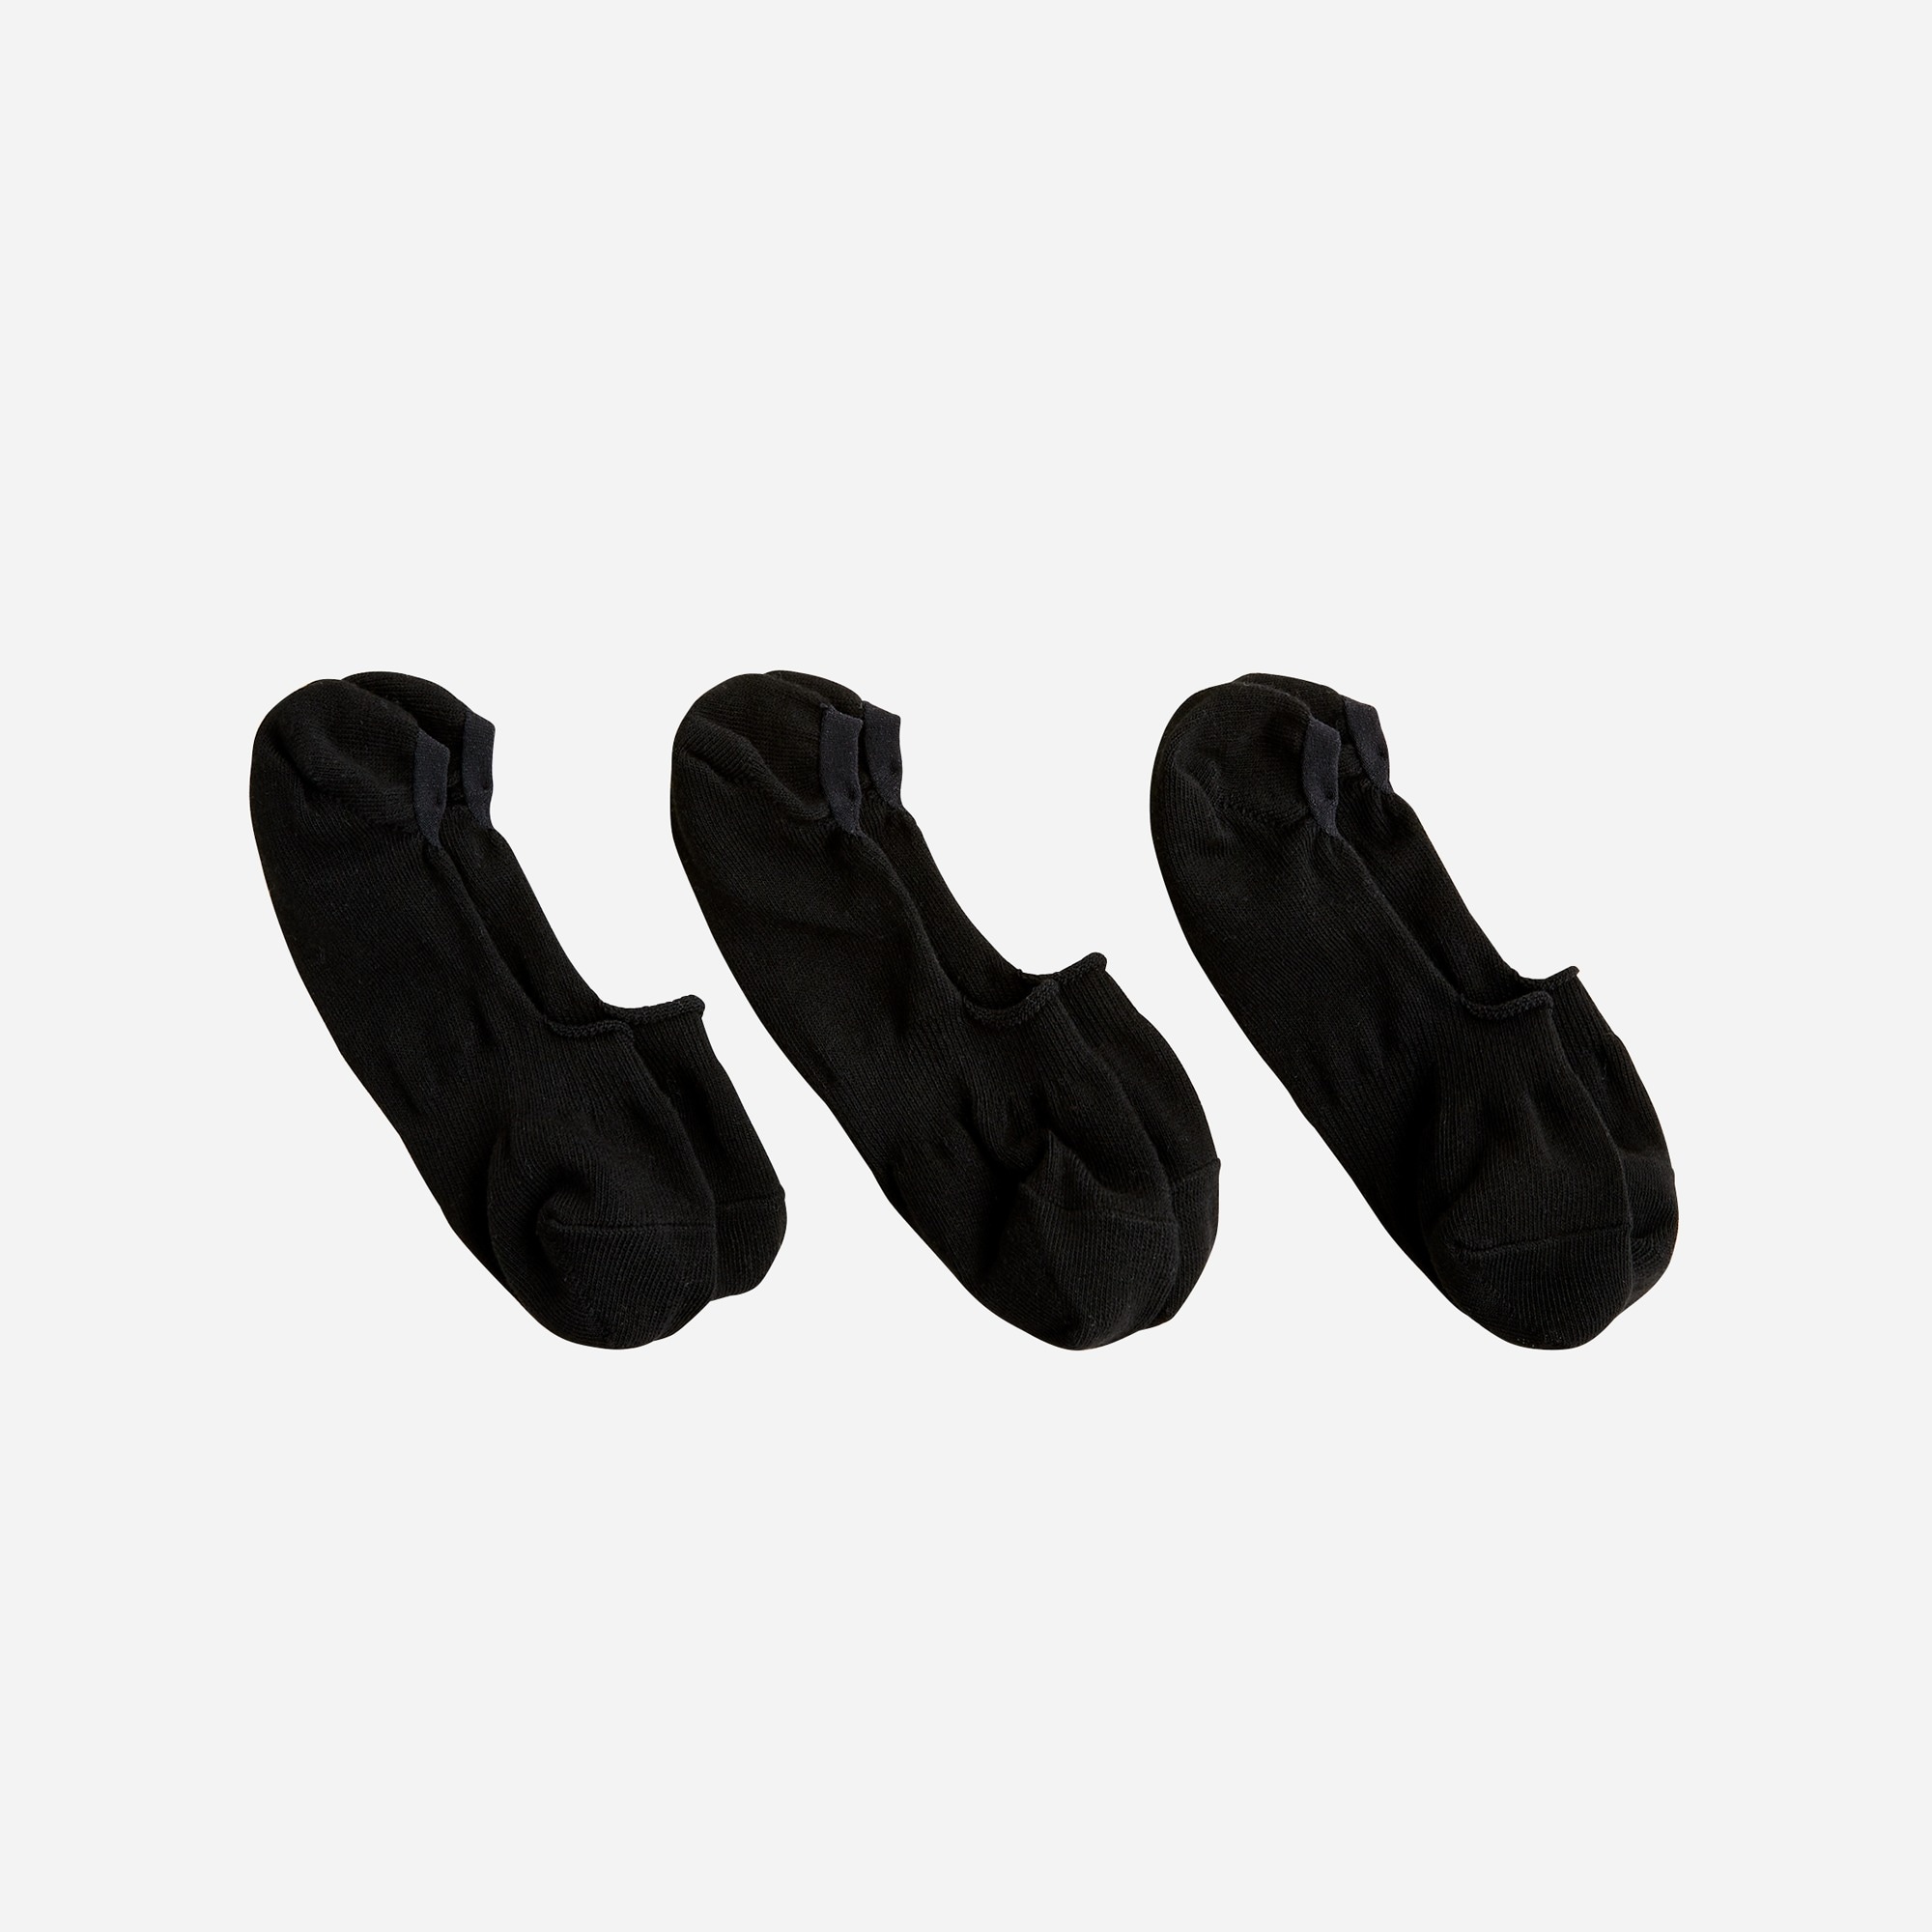 mens No-show socks three-pack